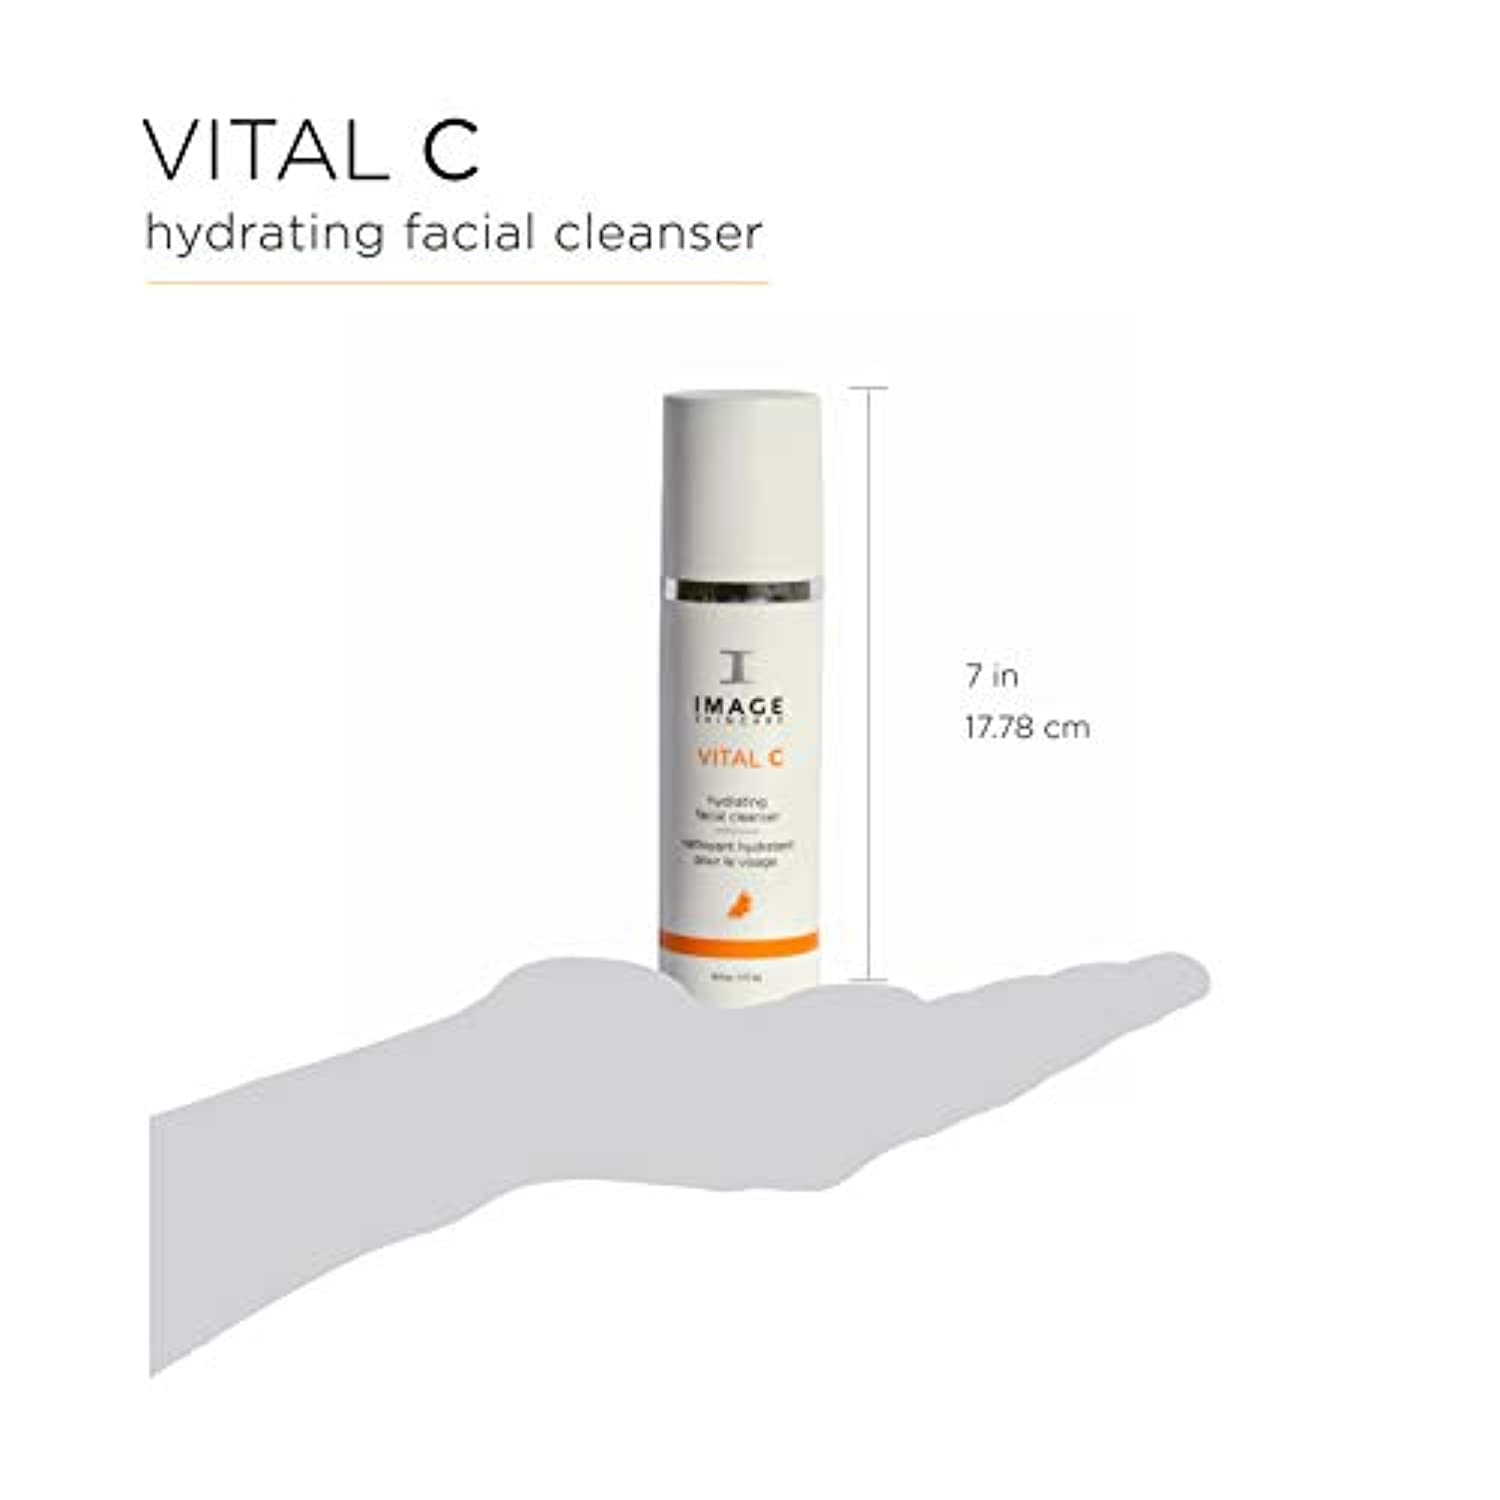 IMAGE Skincare Vital C Hydrating Facial Cleanser, 6 Fluid Ounce